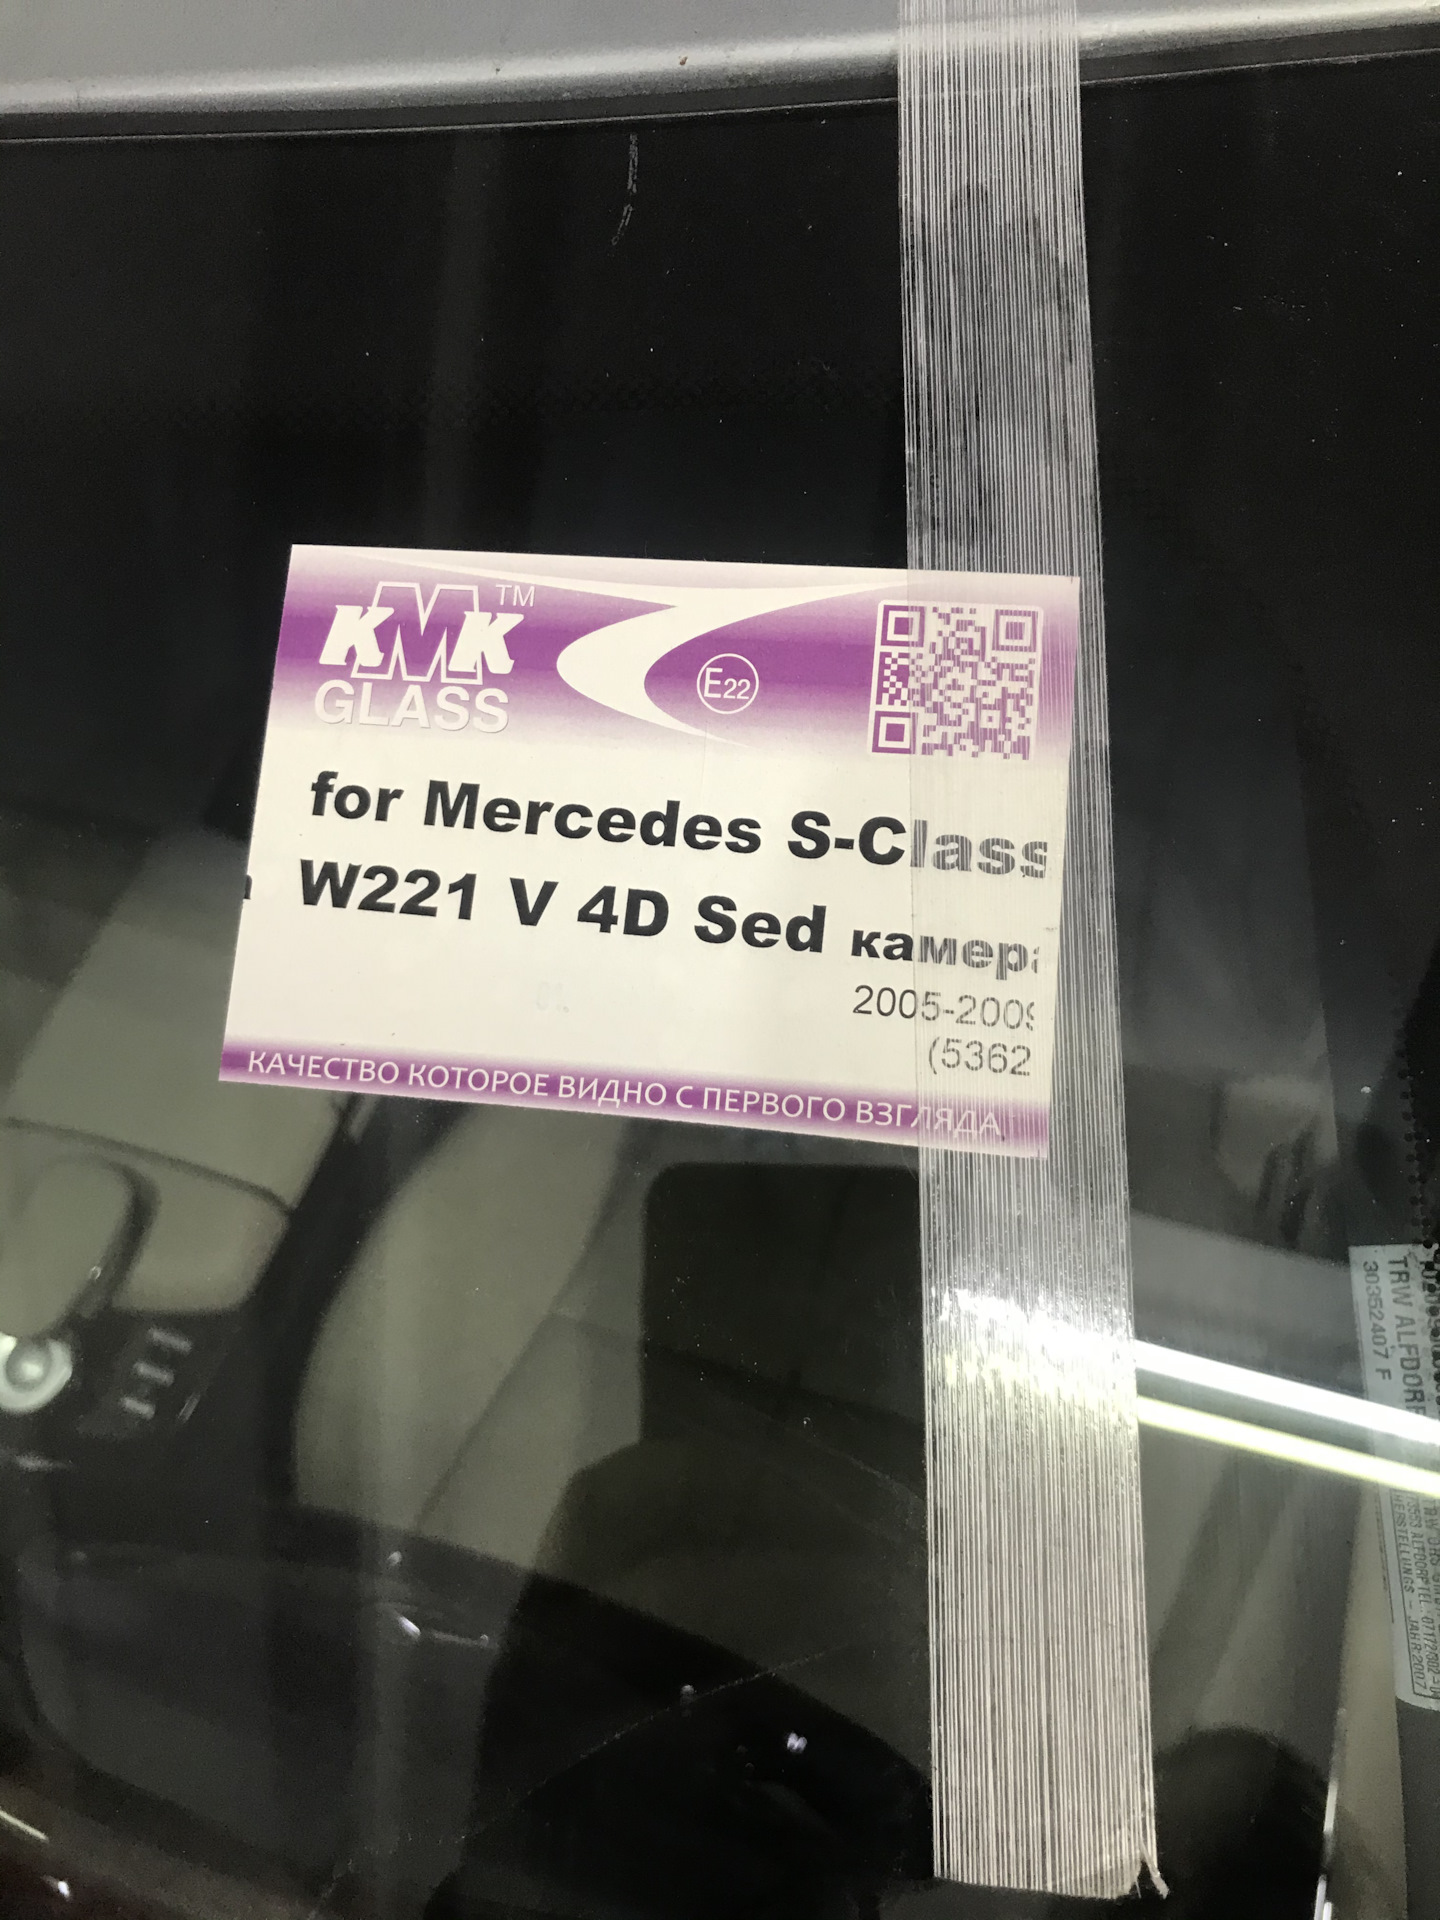 Боковое стекло КМК Glass Mercedes наклейка.